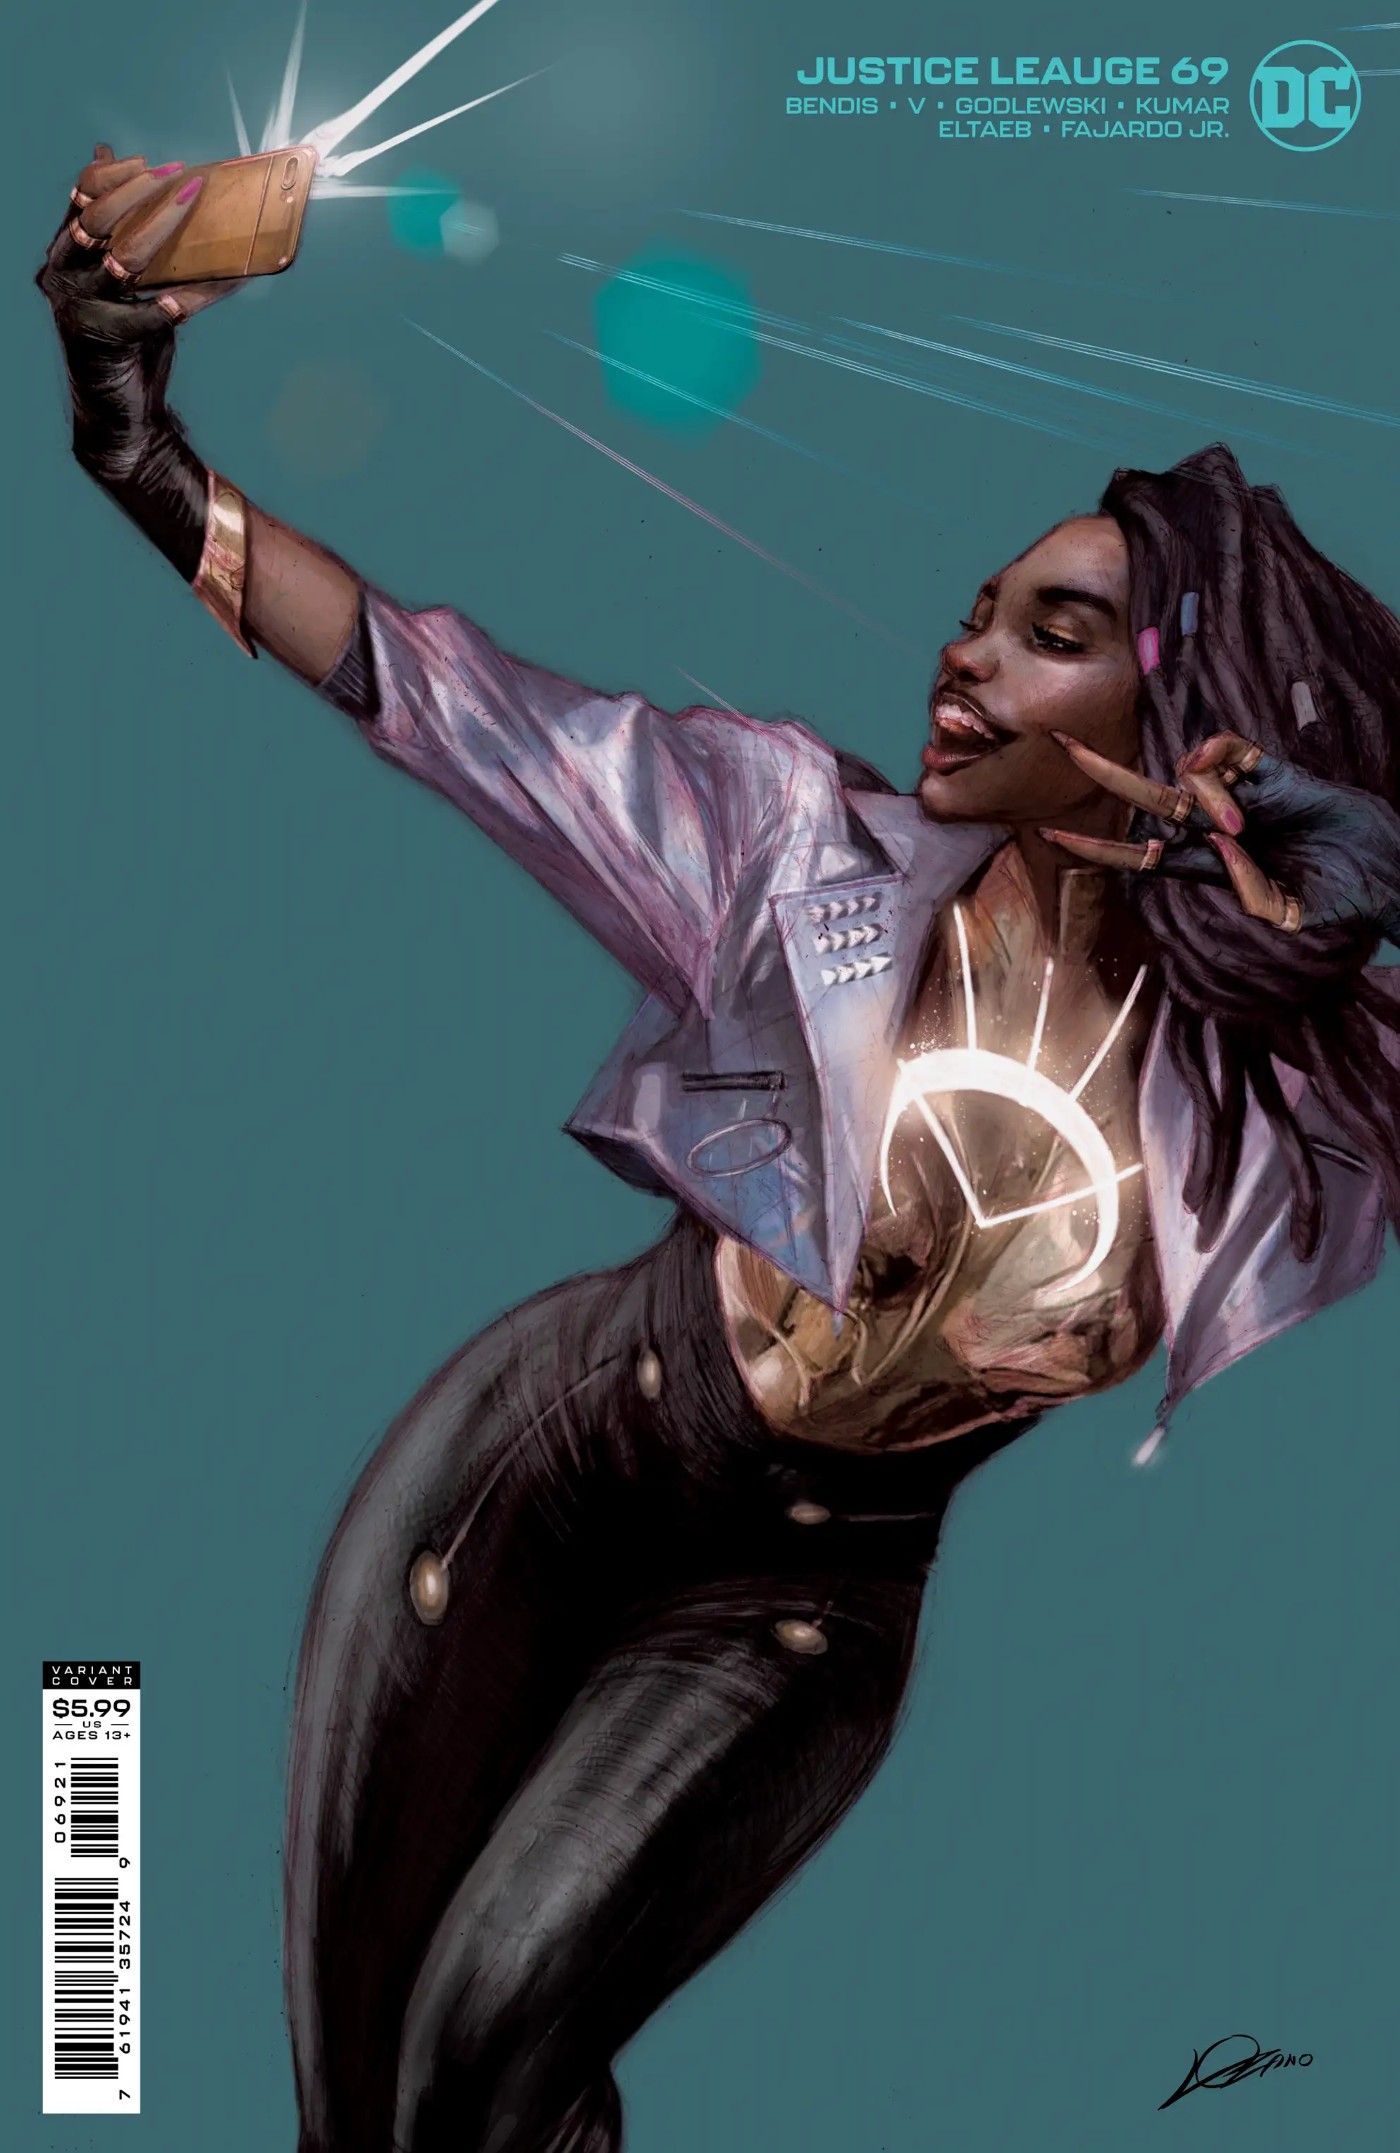 Justice League 69 comic cover